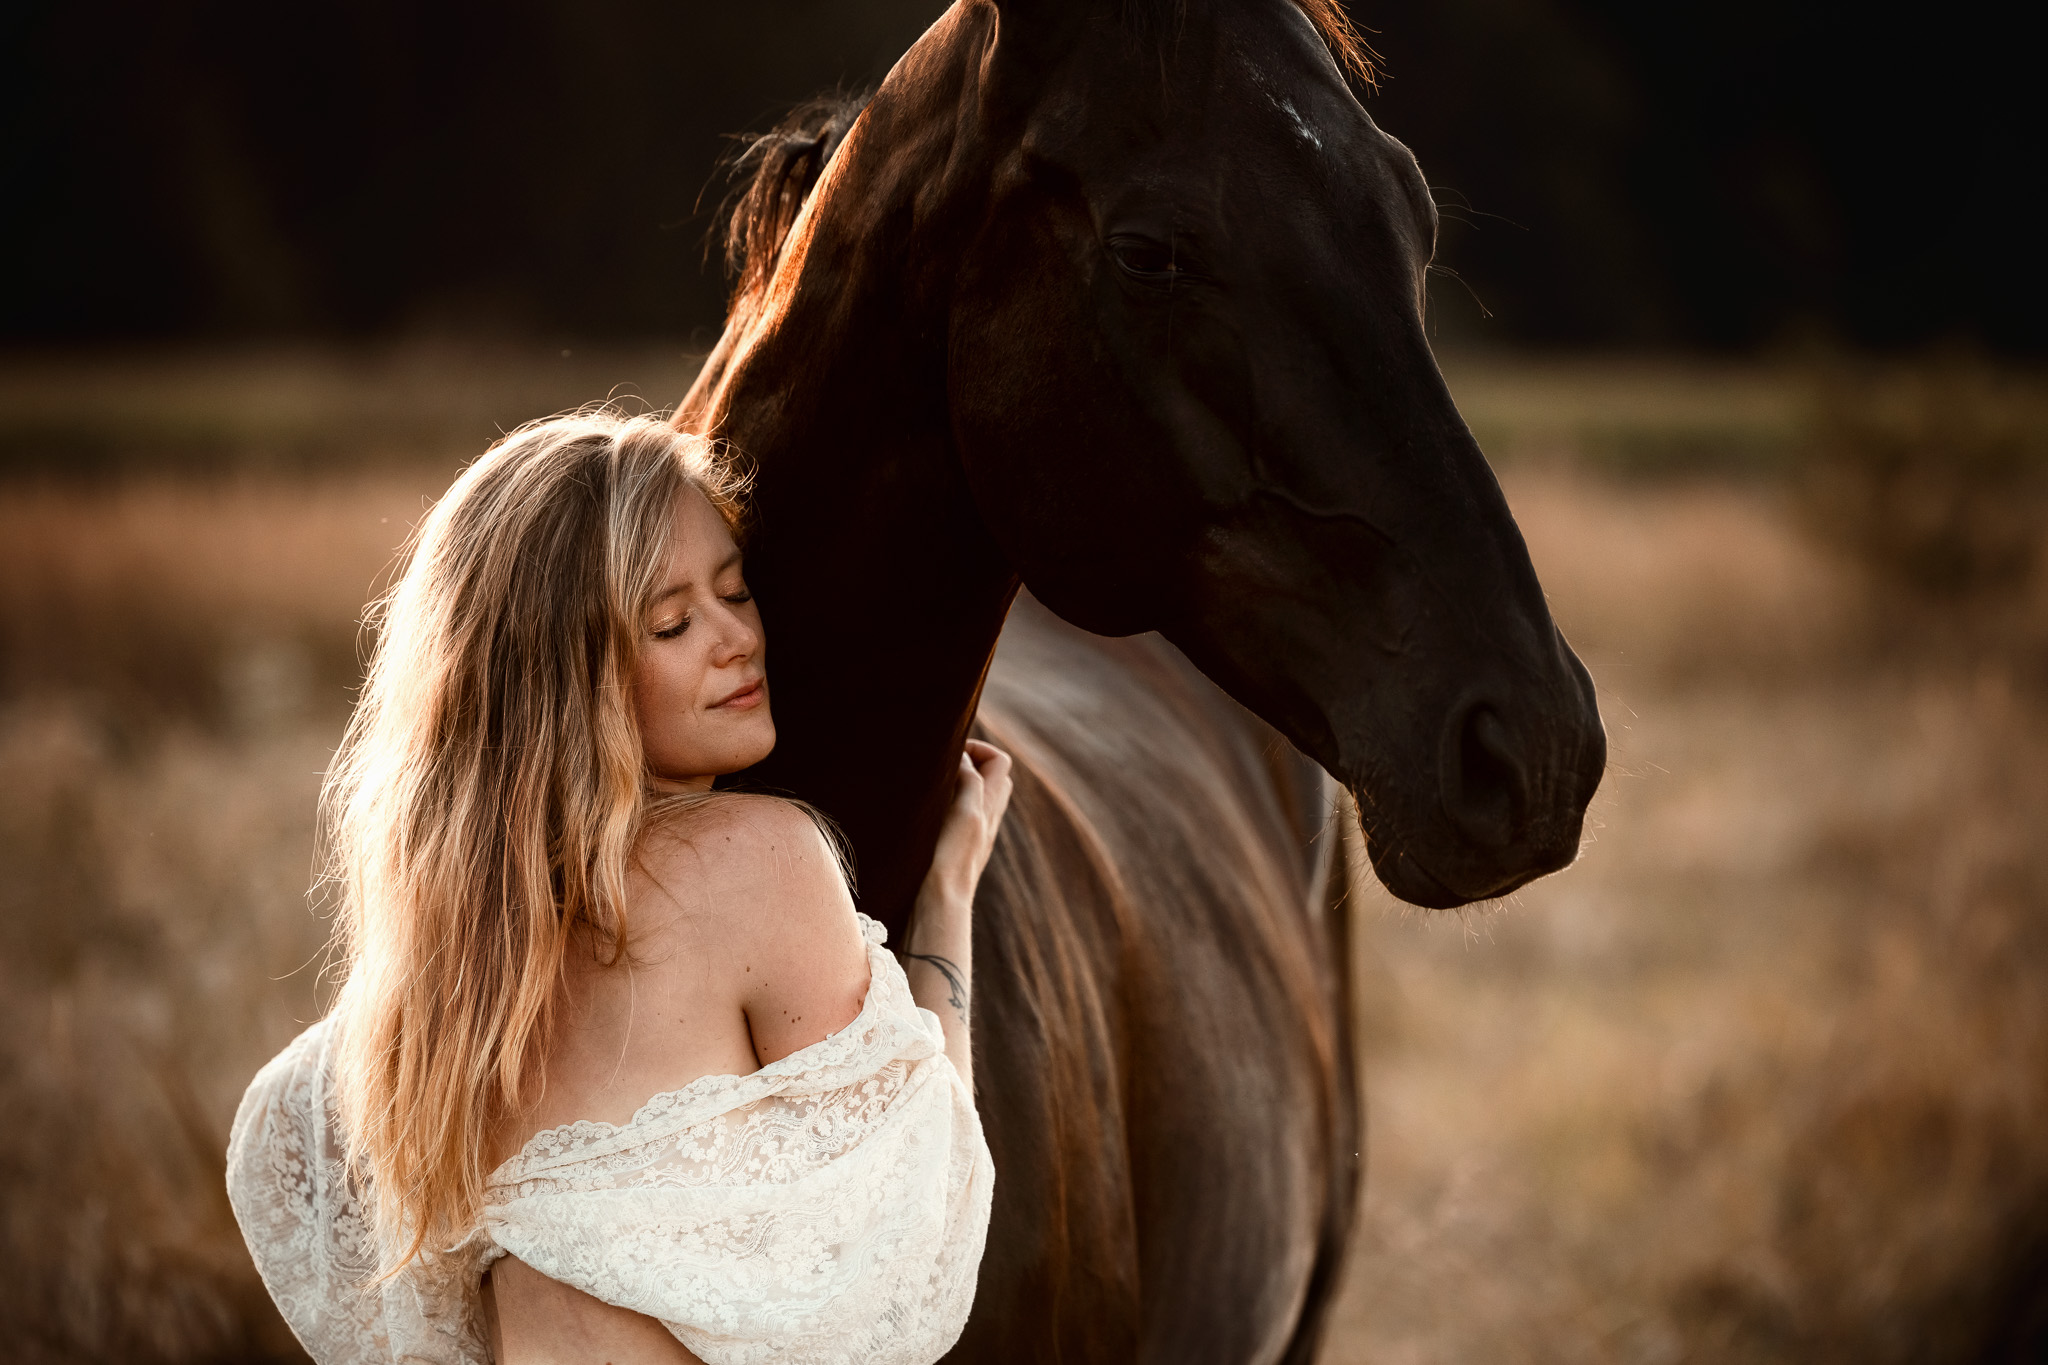 Fotoshooting mit Pferd